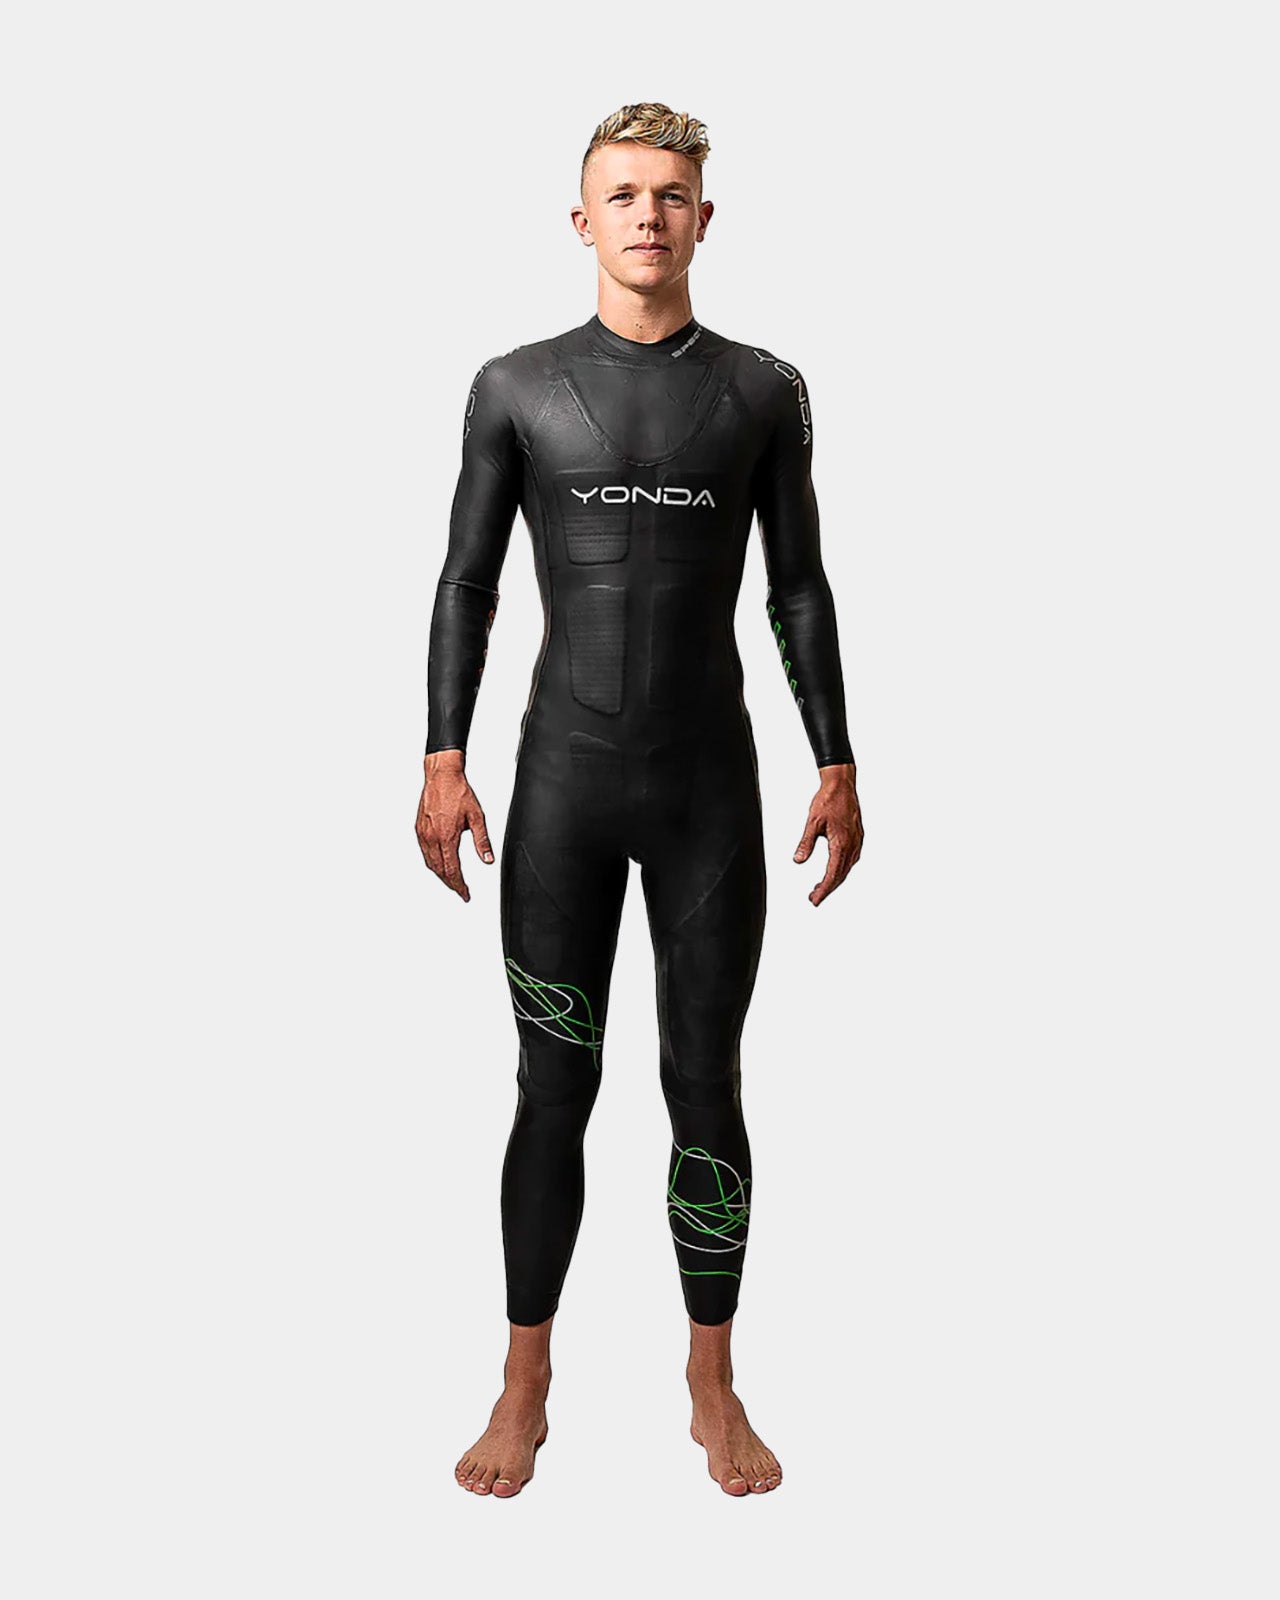 YONDA Spectre Men's Triathlon & Swimming Wetsuit